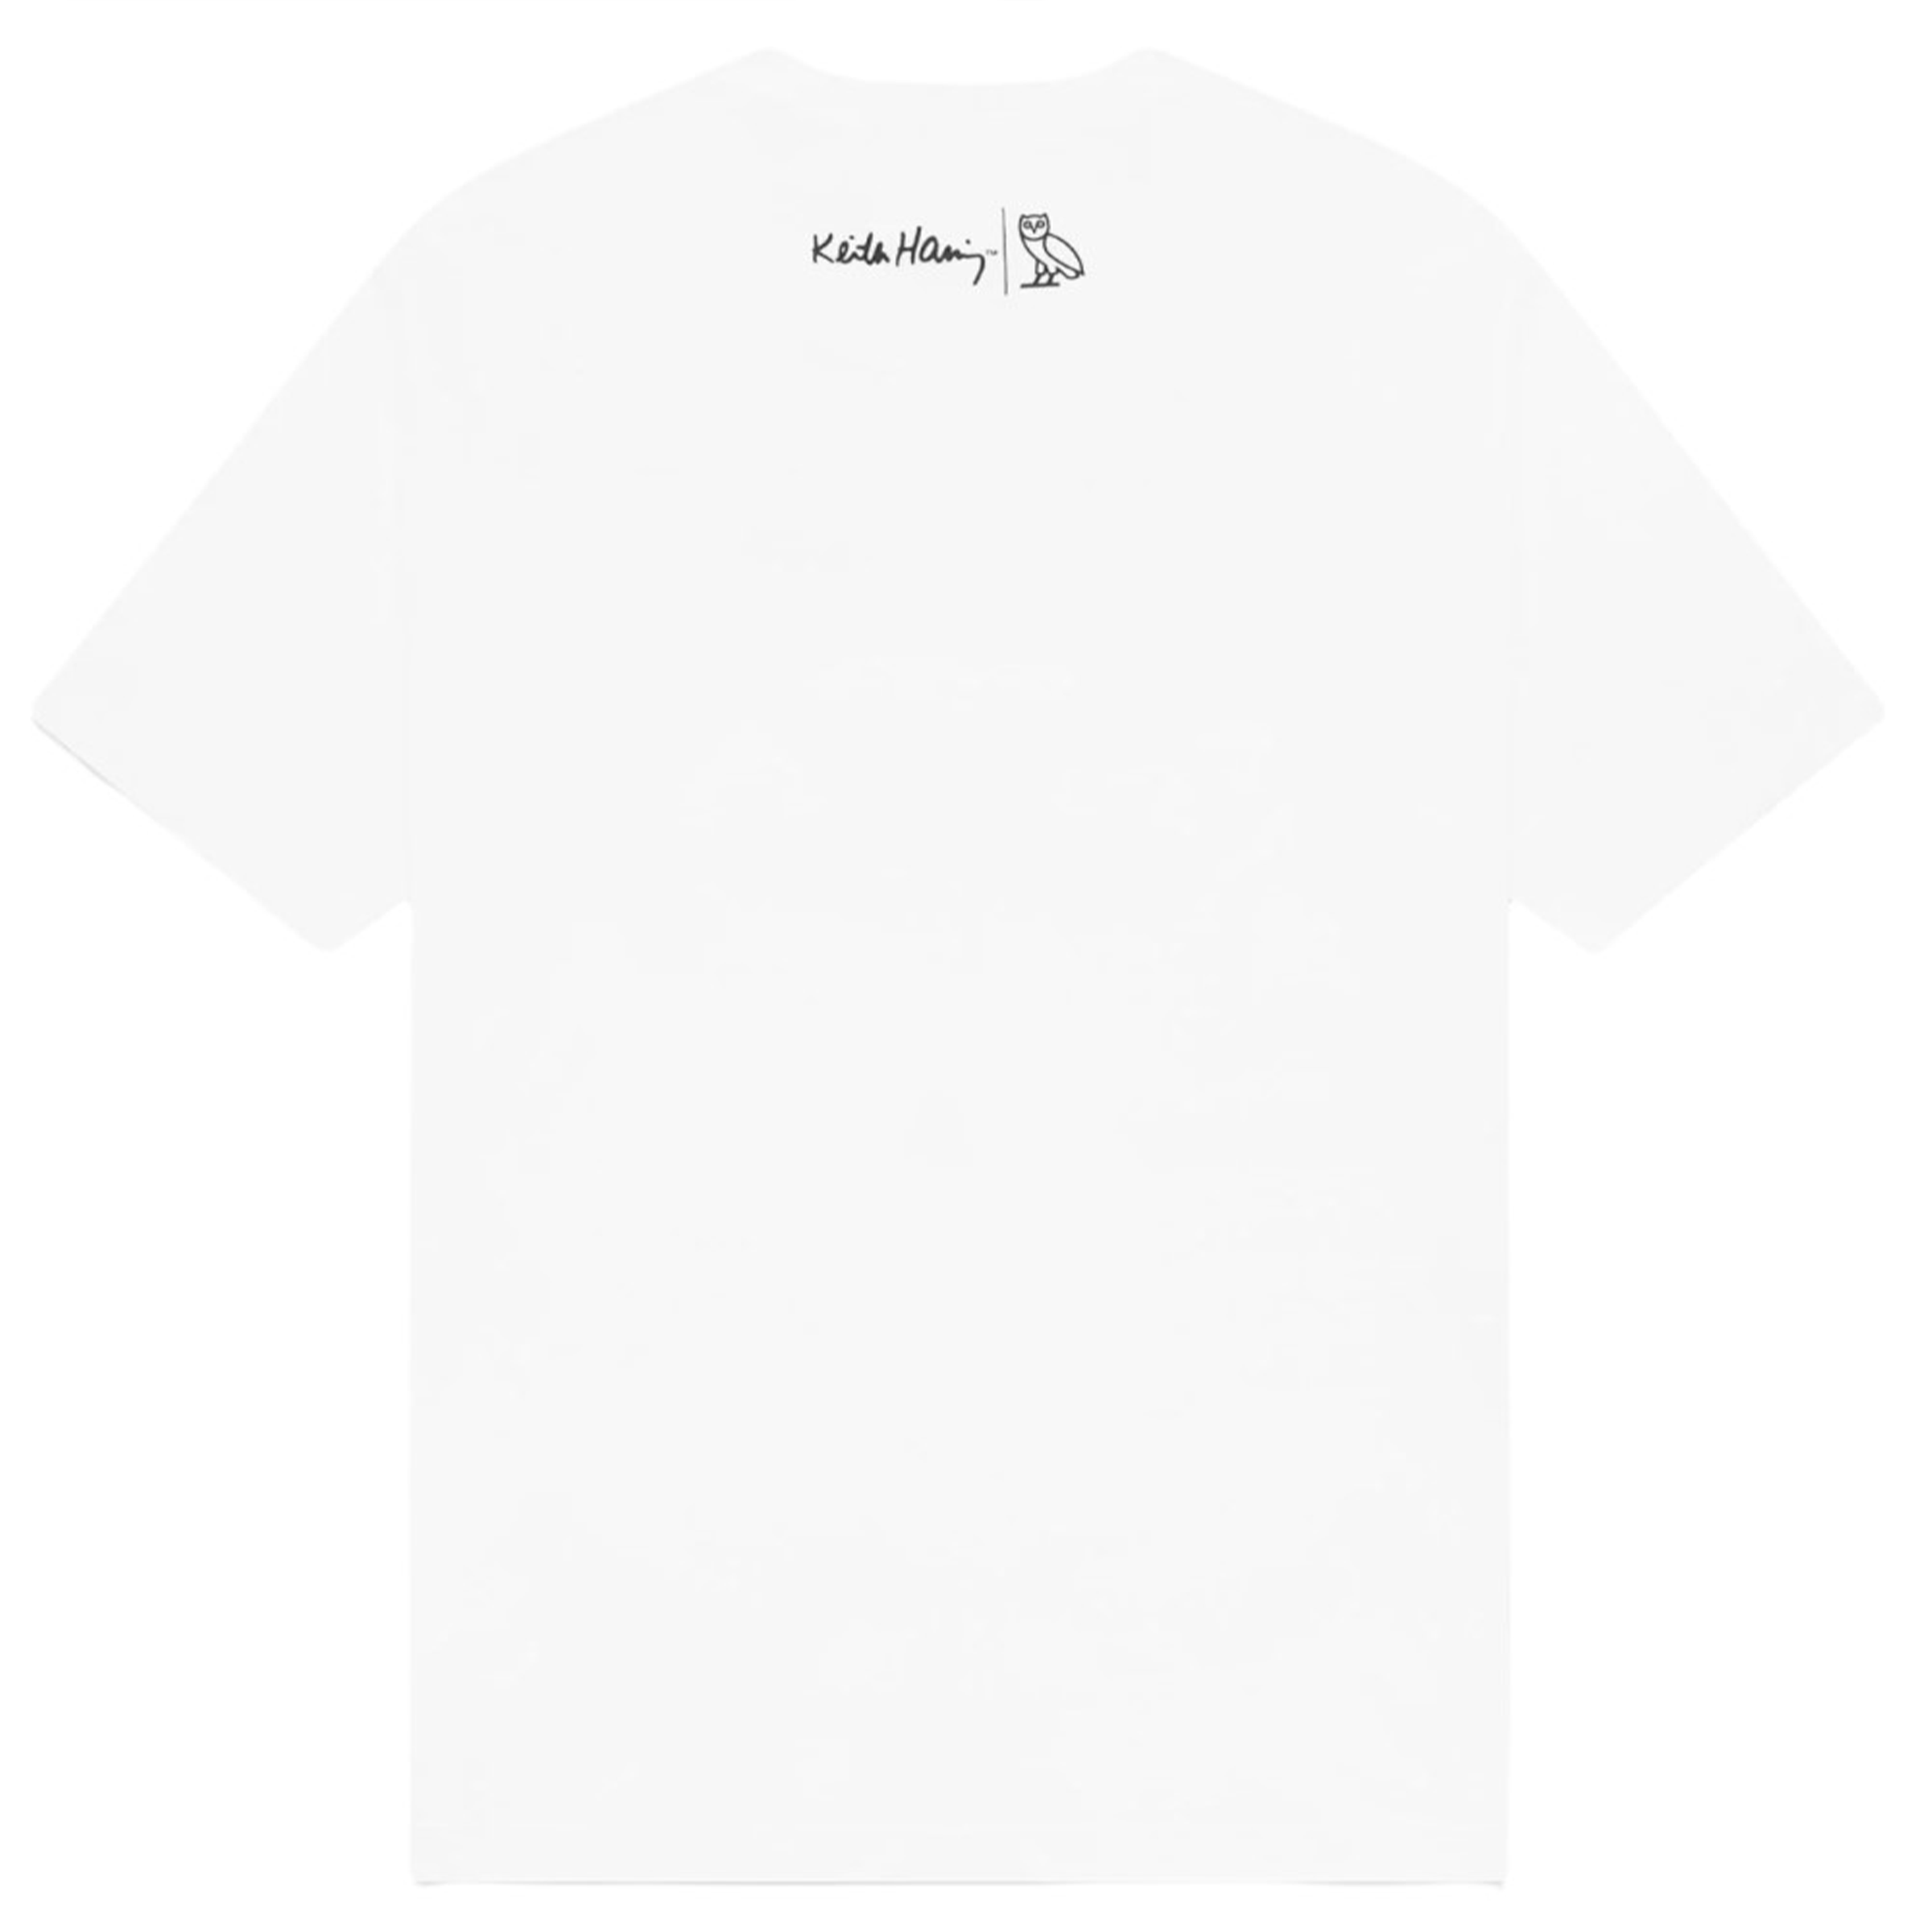 OVO x Keith Haring "Night Owl" T-Shirt